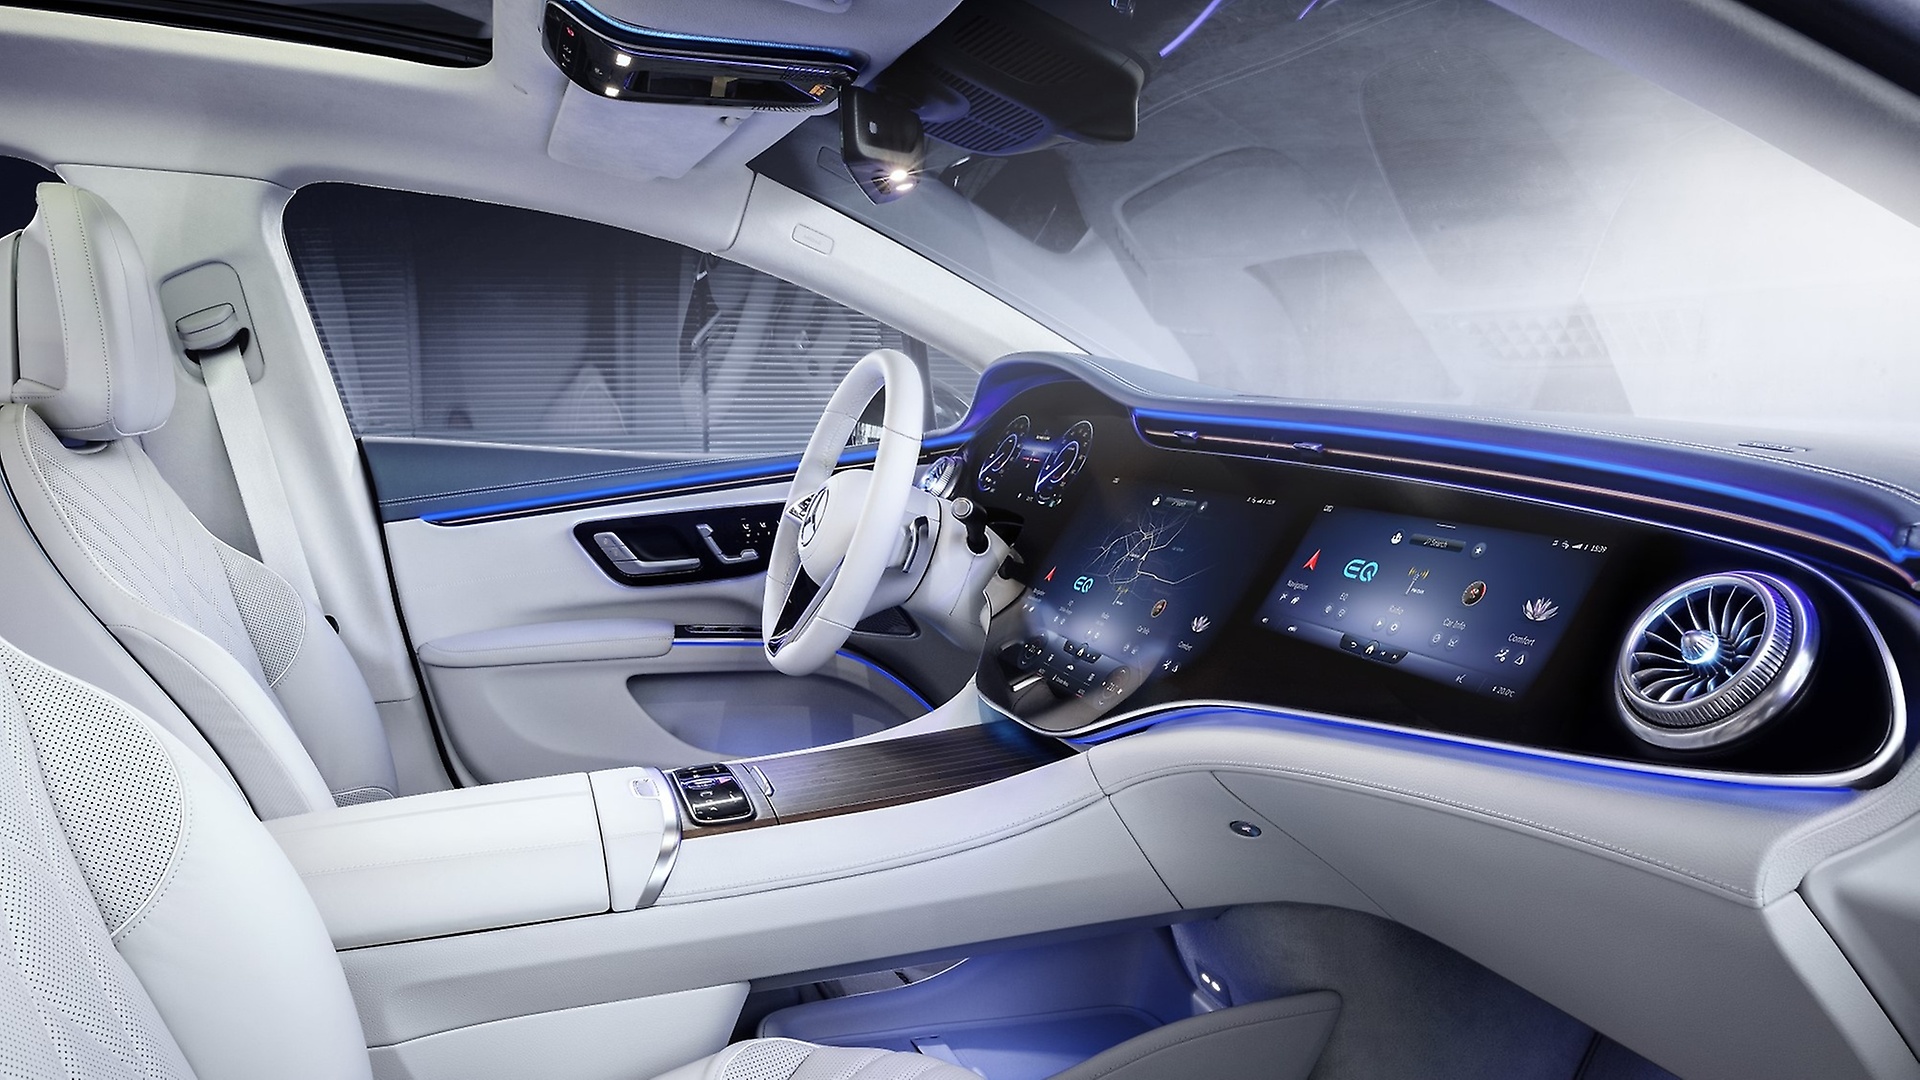 LG전자 인포테인먼트 시스템이 탑재된 메르세데스-벤츠 프리미엄 전기차 세단 2022년형 EQS 차량 내부 모습. LG전자 제공